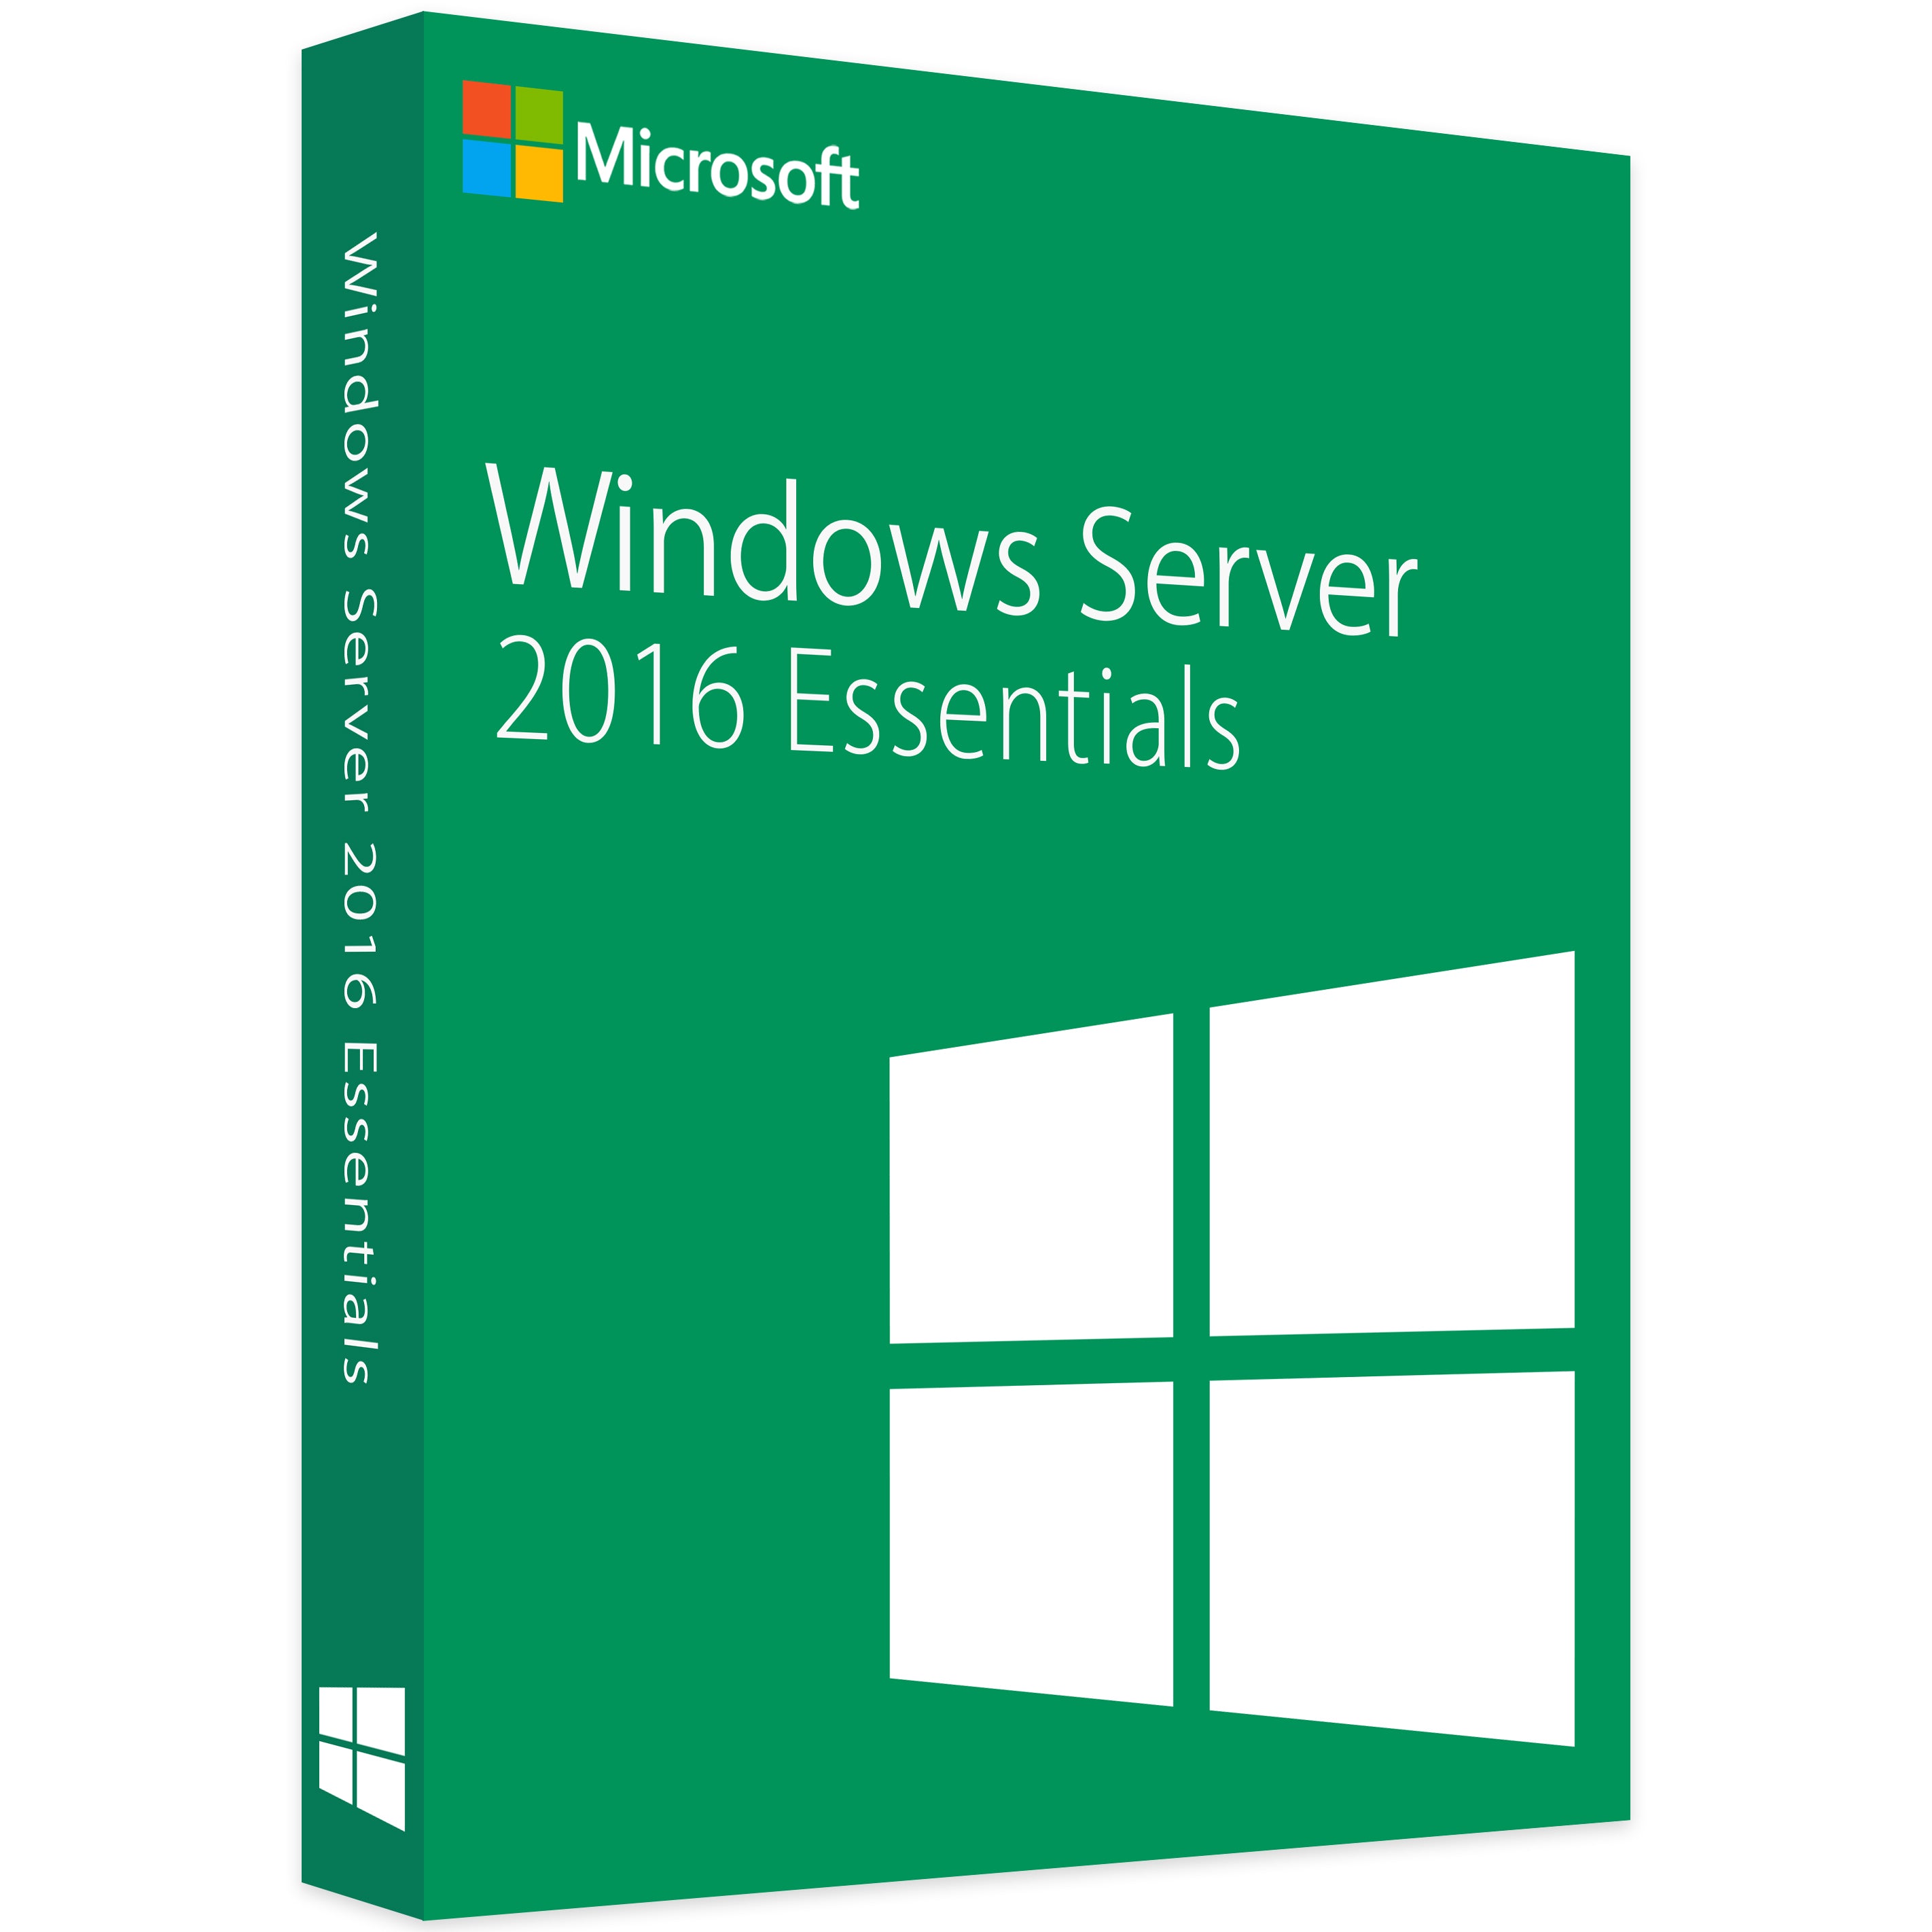 Microsoft Windows Server 2016 Essentials - Lifetime License 1PC